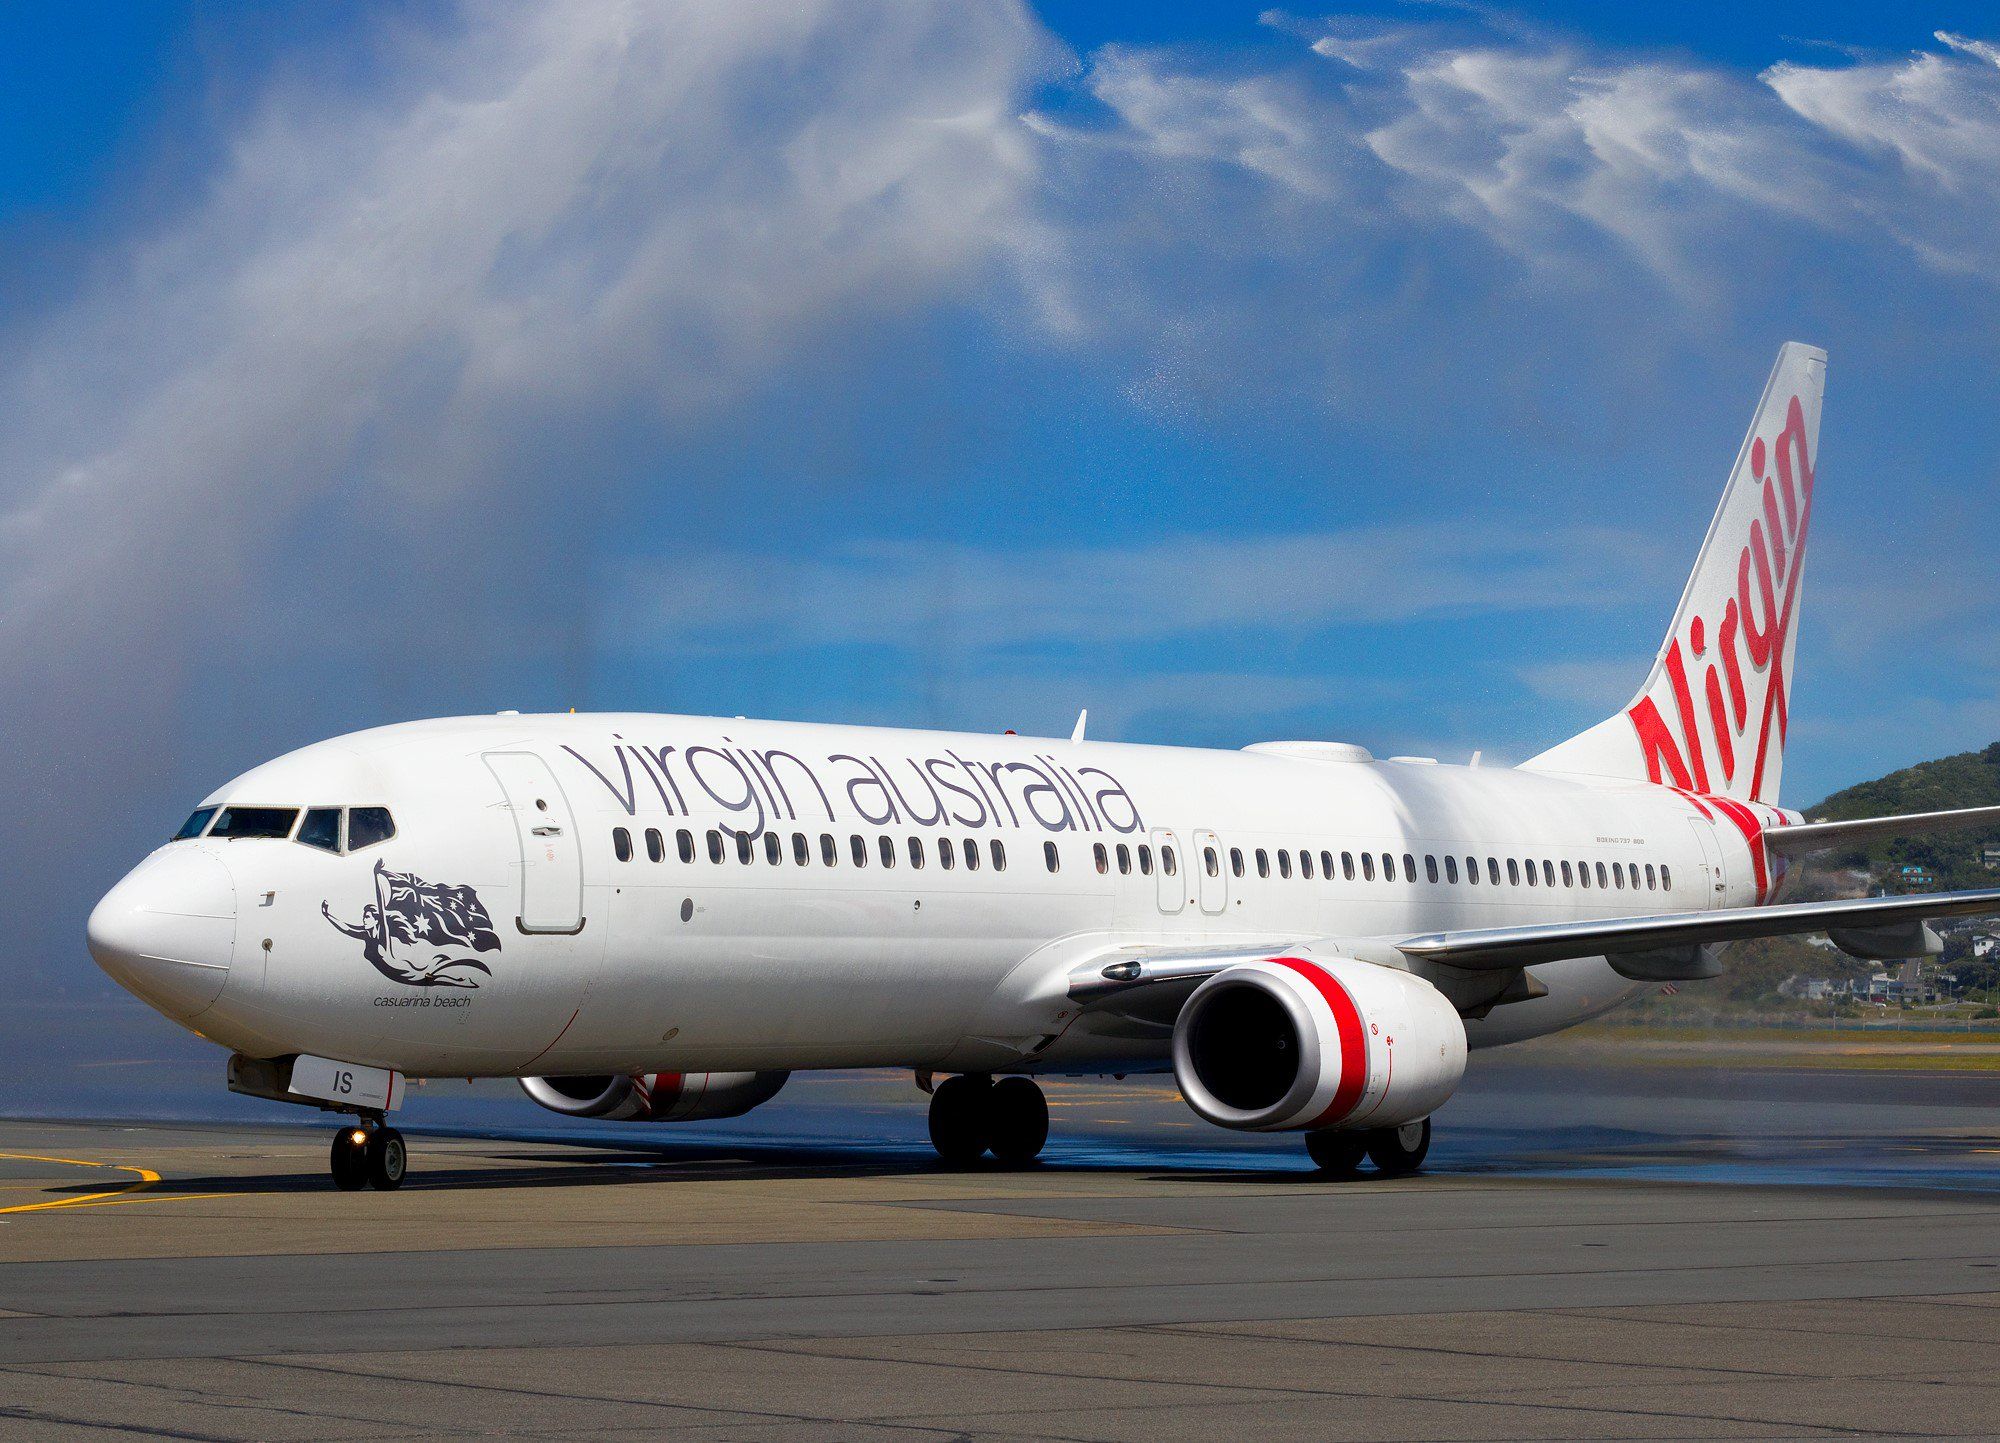 Virgin Australia Boeing 737-800 under a water canon salute.